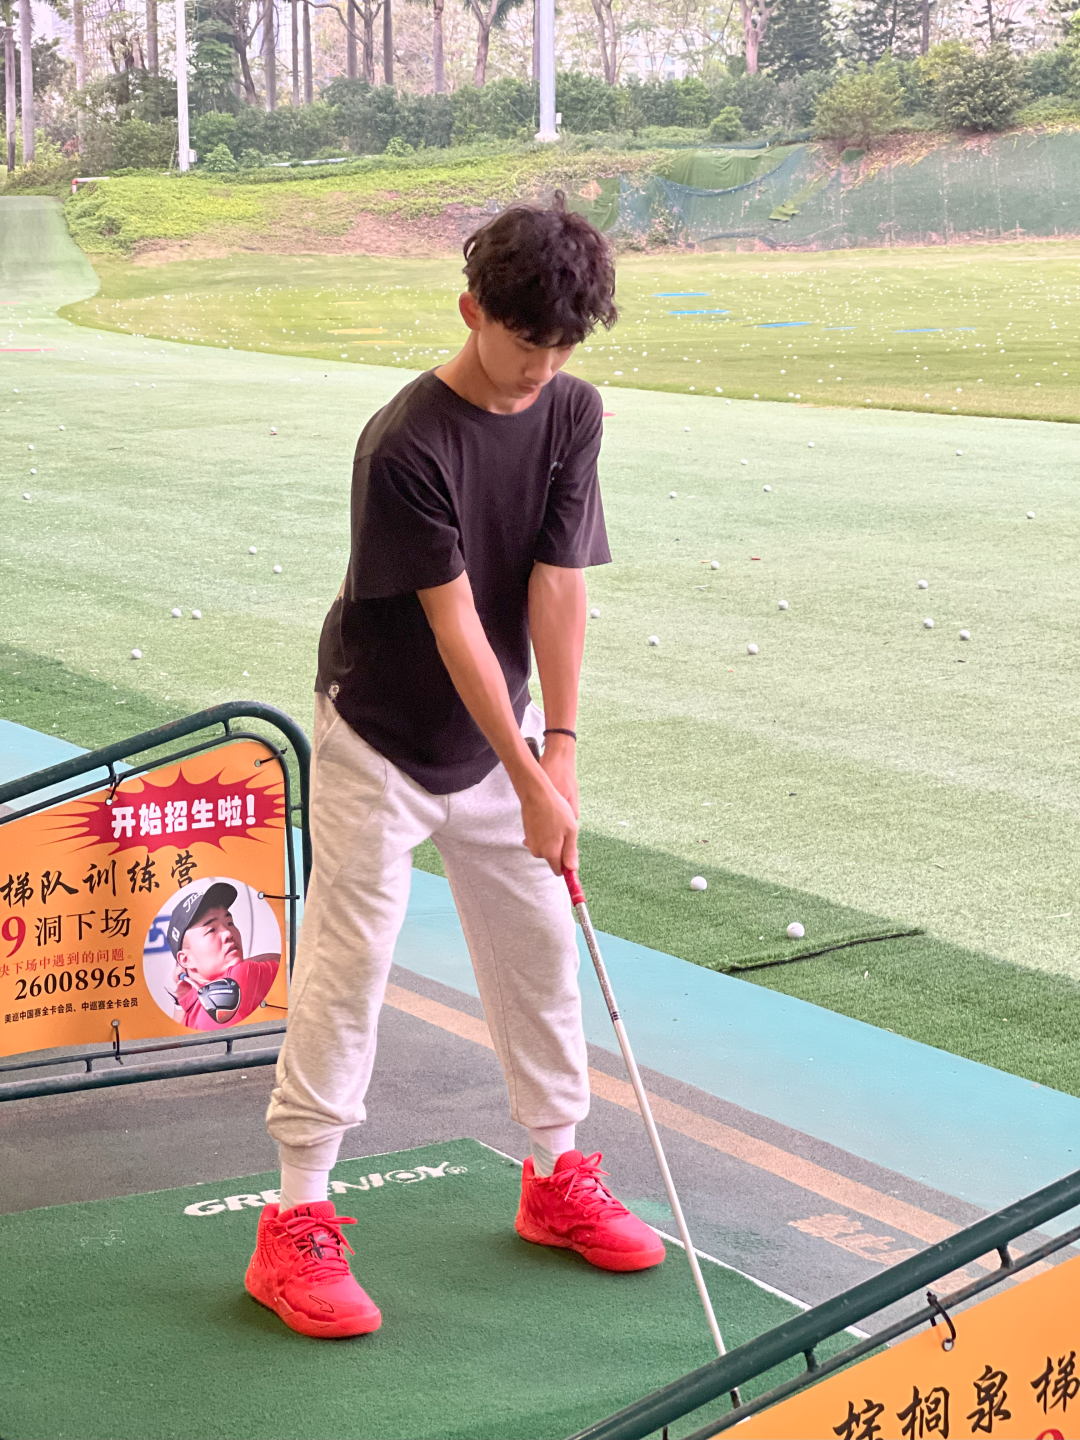 Golf Learning | 挥杆吧少年！沙河高尔夫球会研学之行